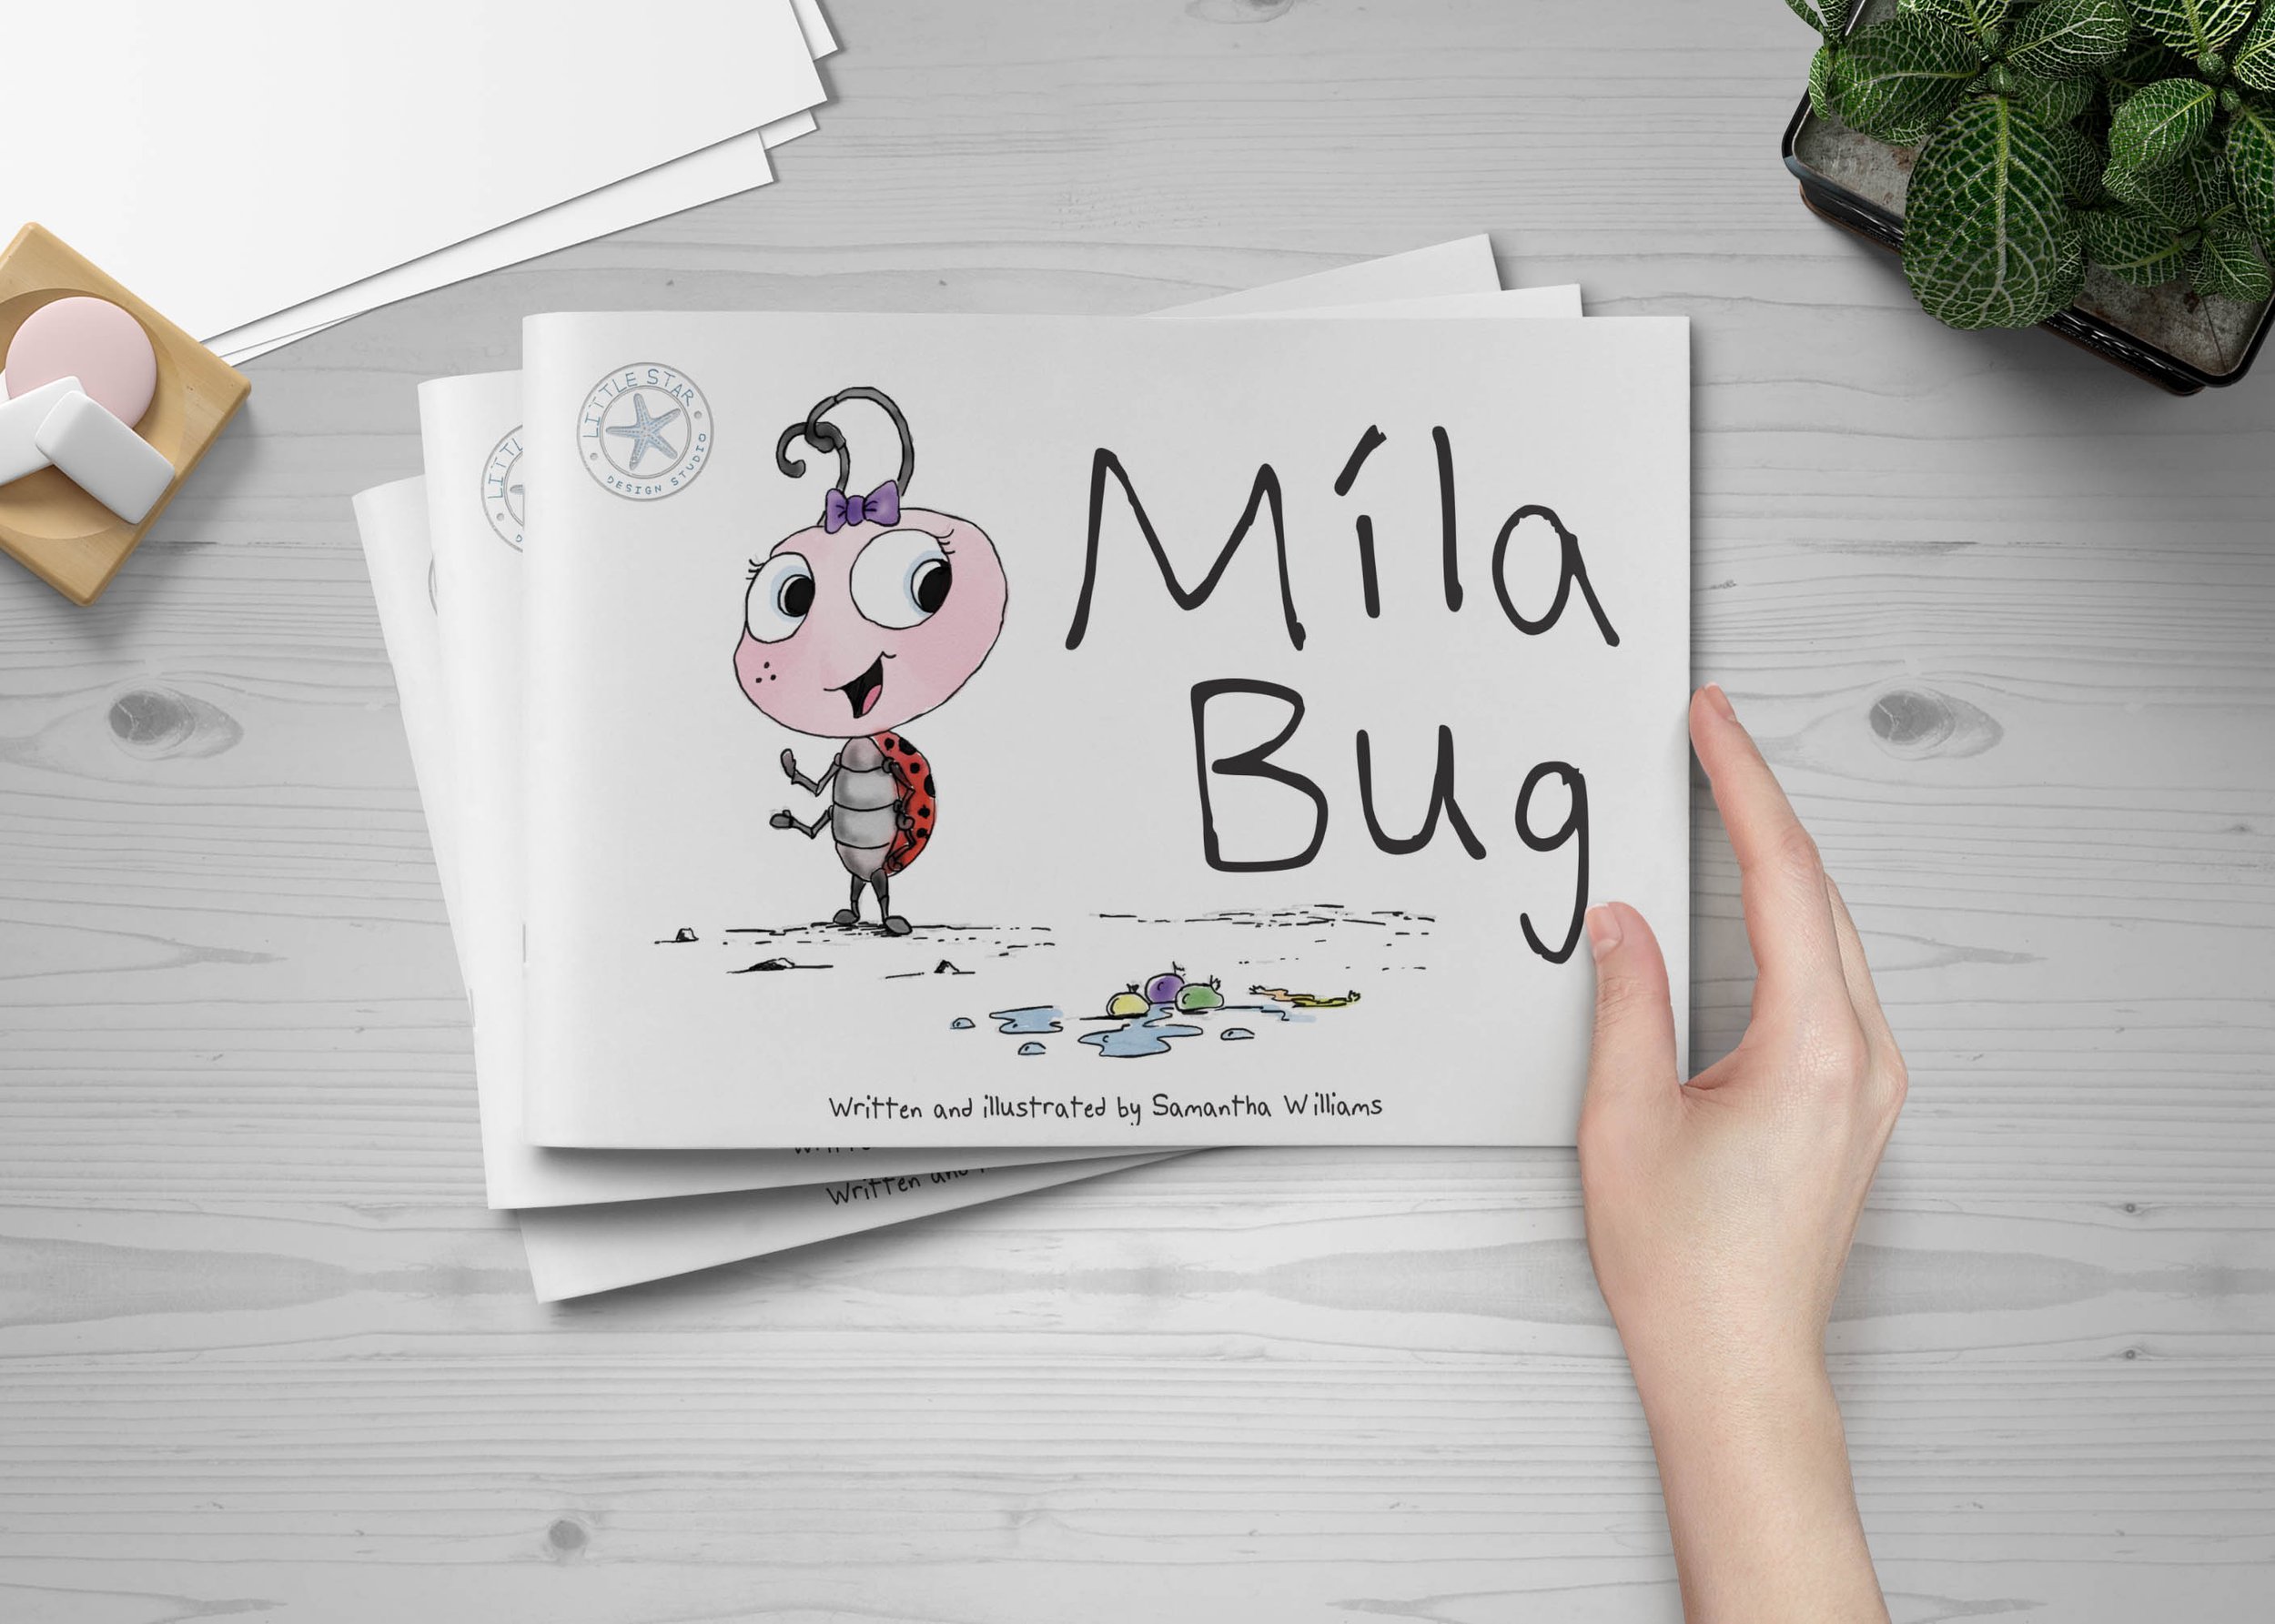 mila bug books on table.jpg